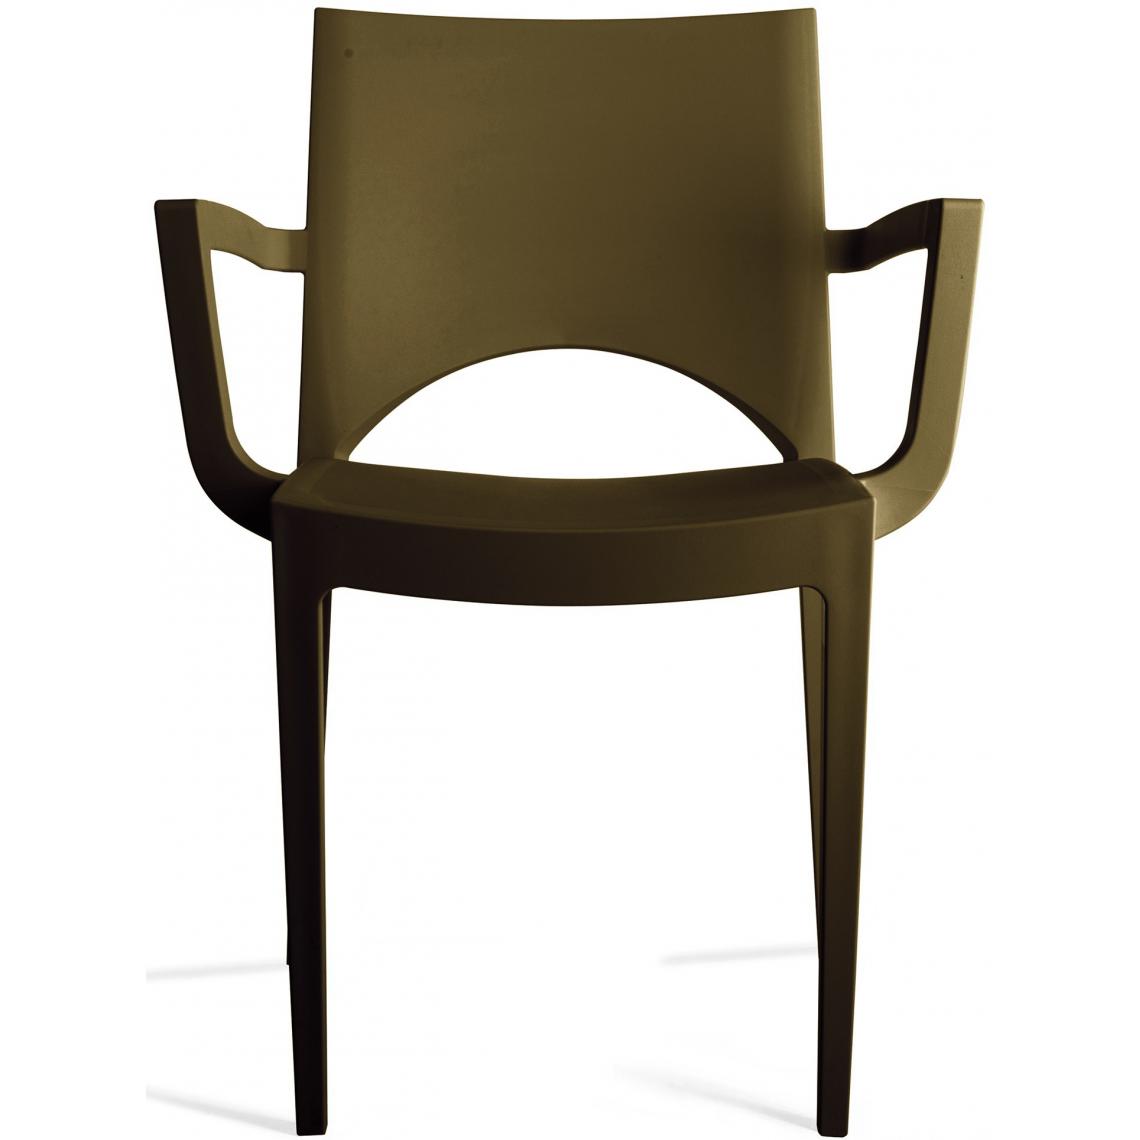 3S. x Home - Chaise Design Marron PALERMO - Chaises